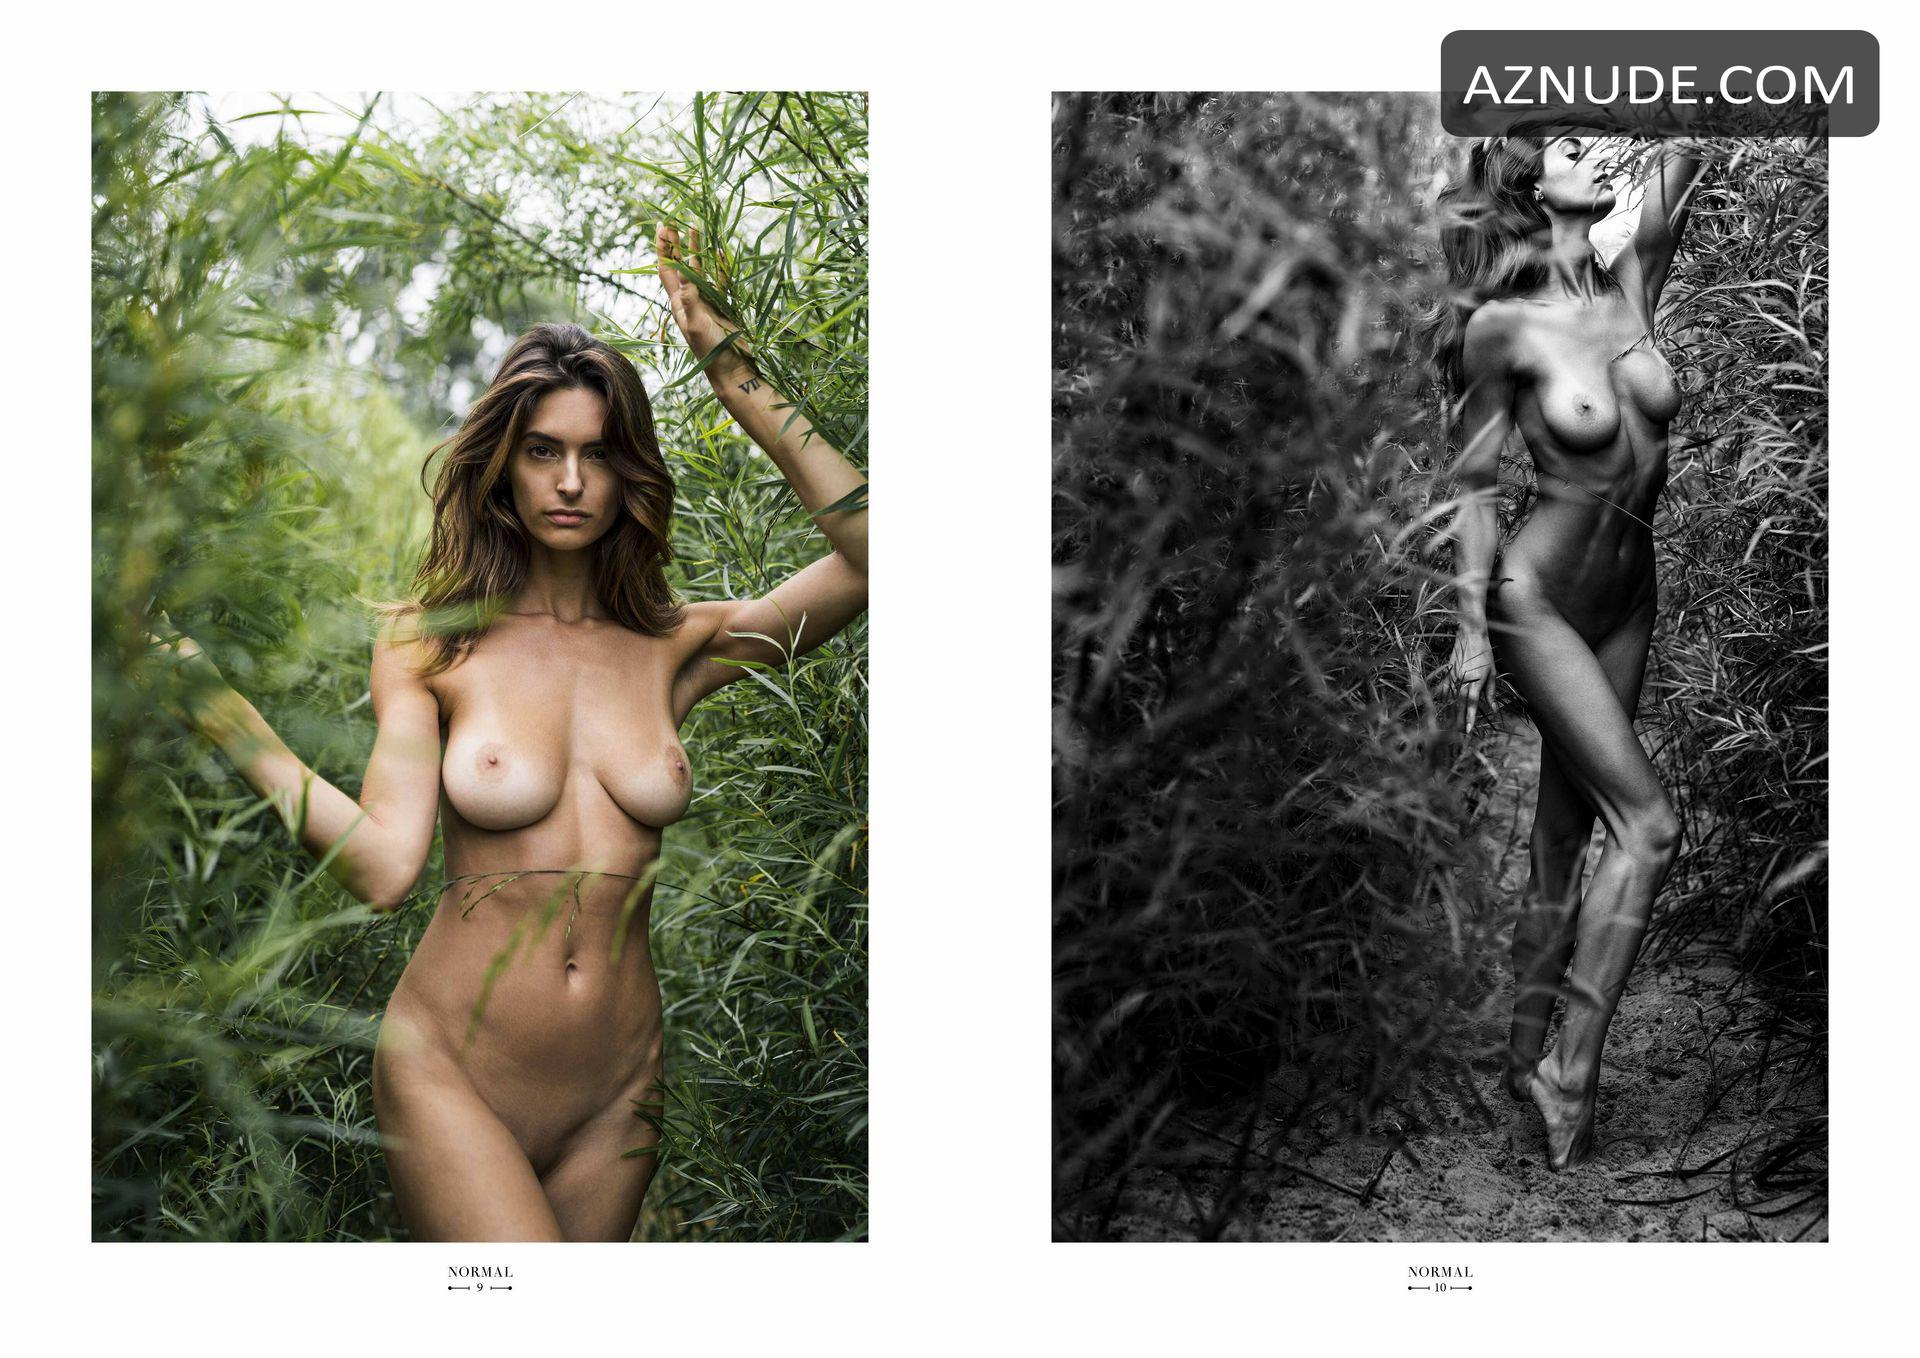 Elisabeth Giolito nude photos from Normal magazine - AZNude